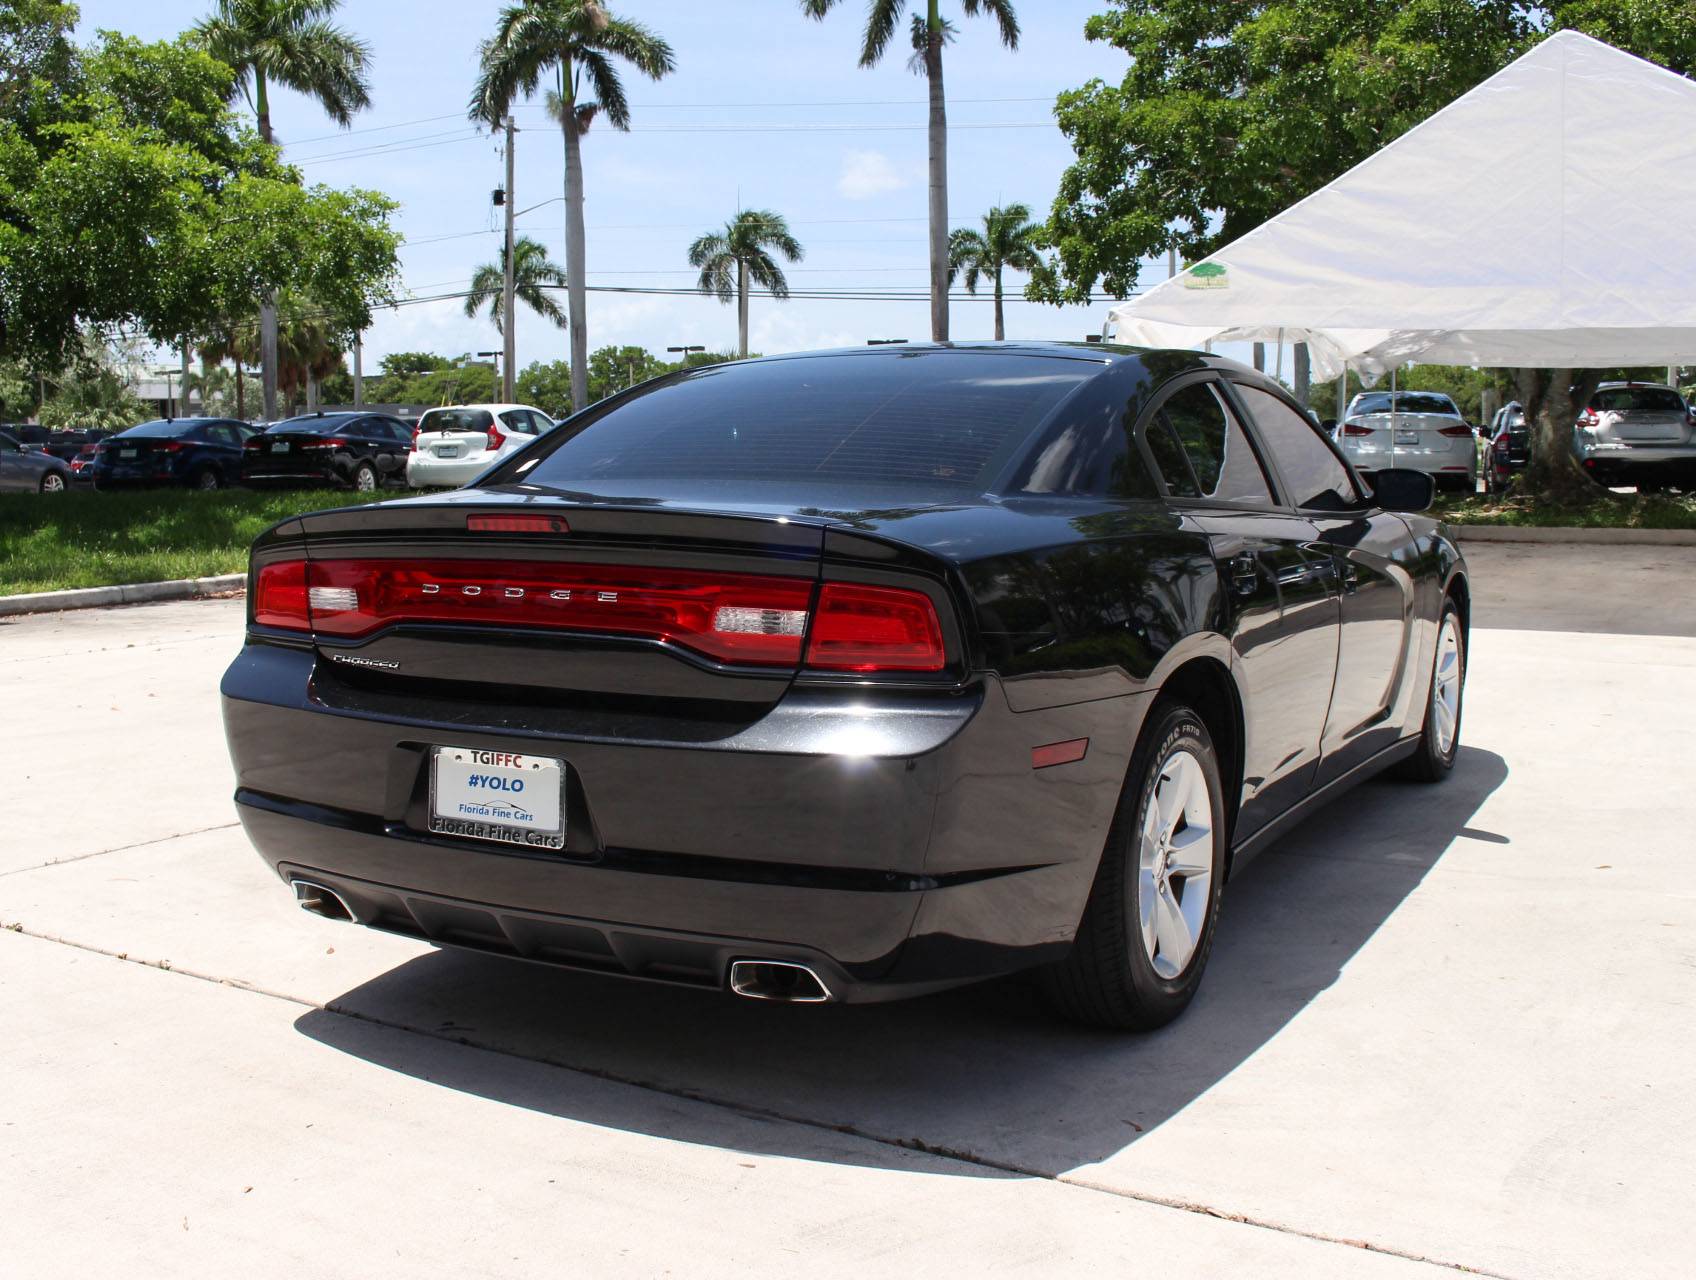 Florida Fine Cars - Used DODGE CHARGER 2014 MARGATE Se